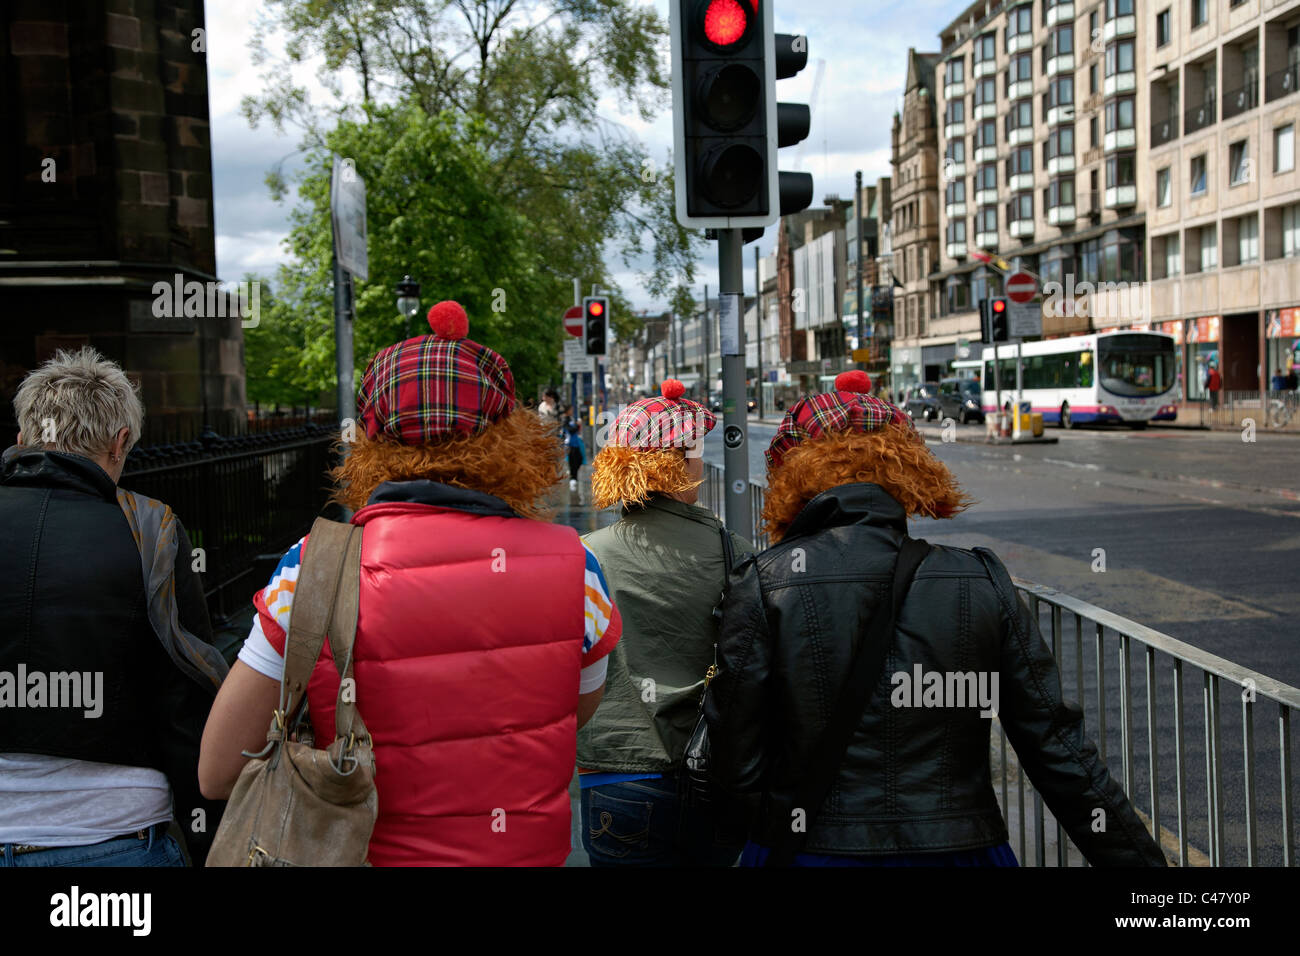 tourists wearing jimmy hats in edinburgh Stock Photo